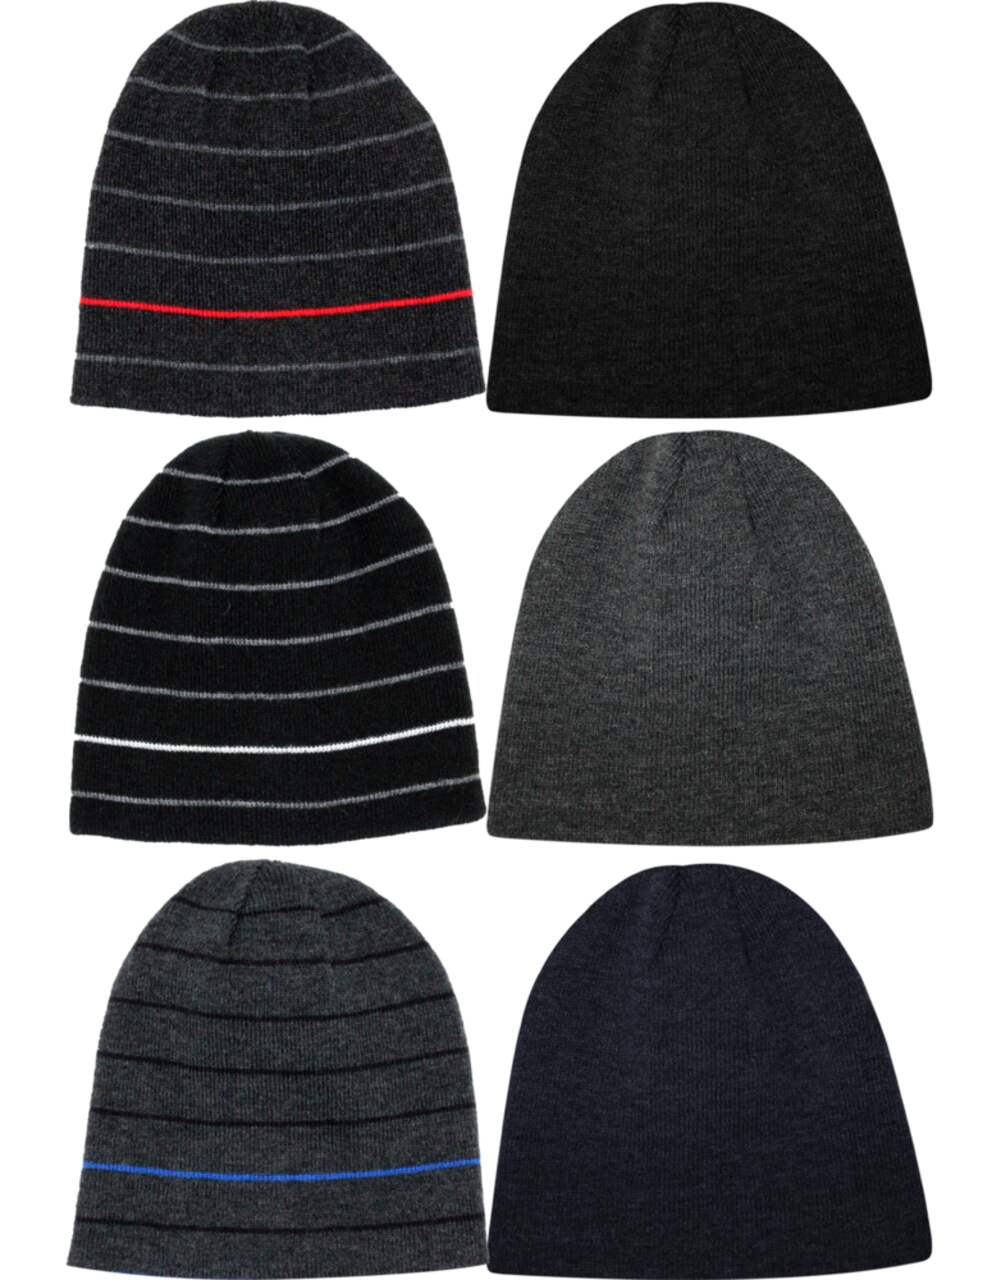 Hot Paws Men's Warm Rib Knit Toque Beanie Hat Winter Ski/Snow Sports  (2-Pack), Assorted